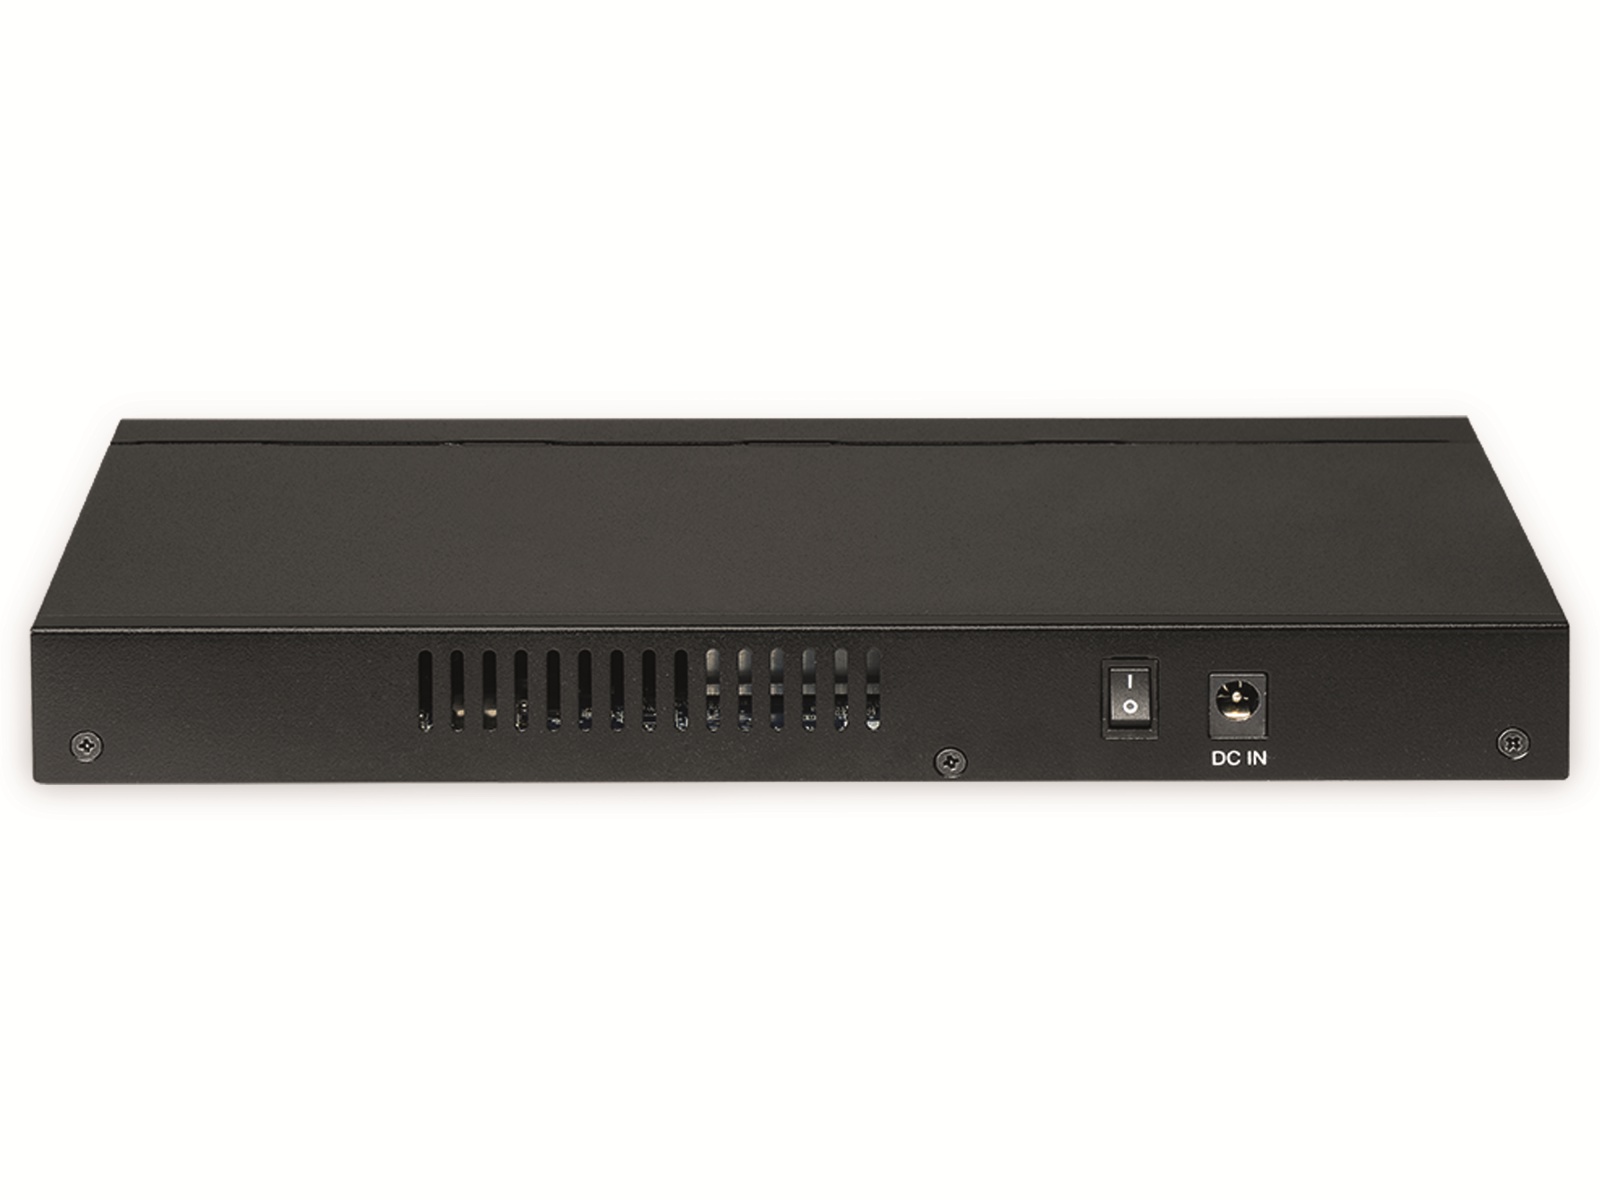 Edimax Gigabit-Switch GS-3008P, 8-port, Long-Range